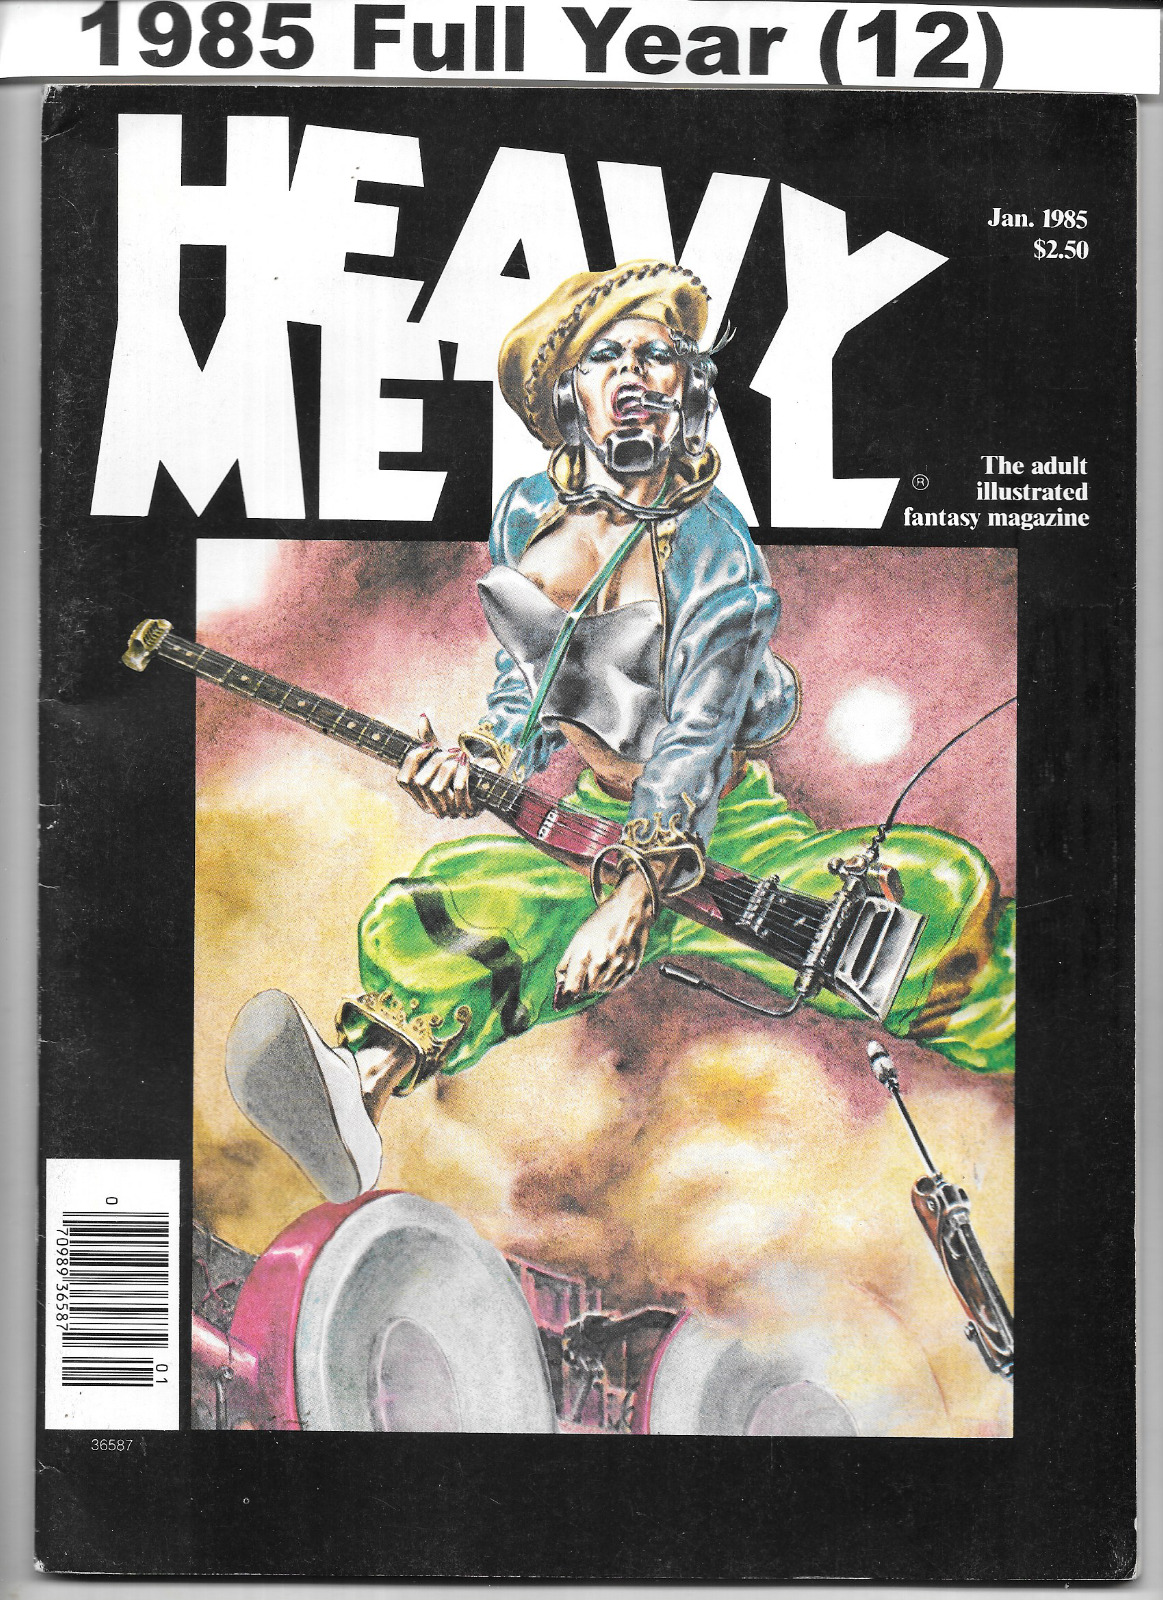 Heavy Metal Magazine 1985 Complete Run (12) January thru December FN+ Est. 1977